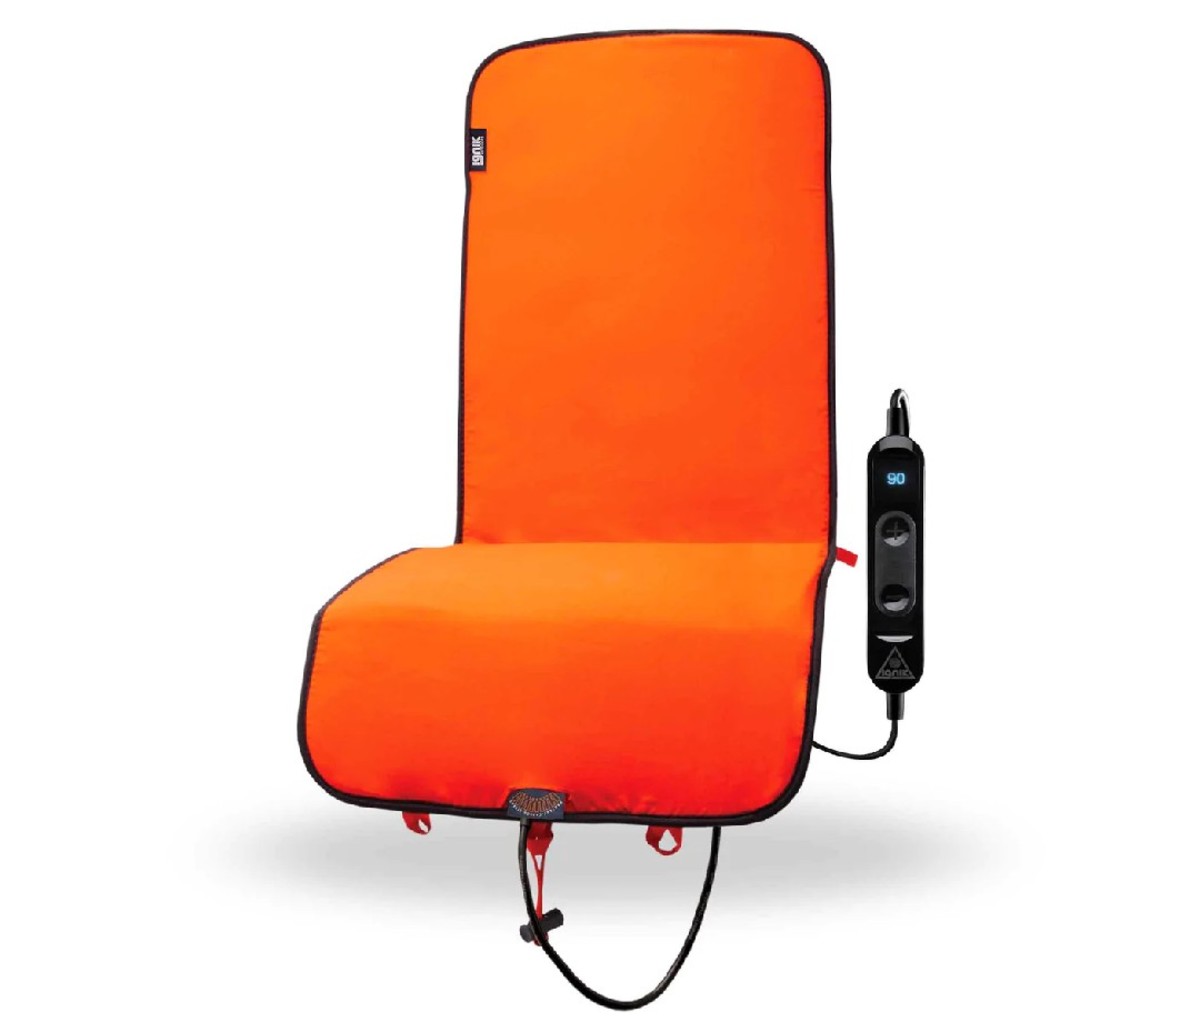 Ignik portable heating pad, orange.